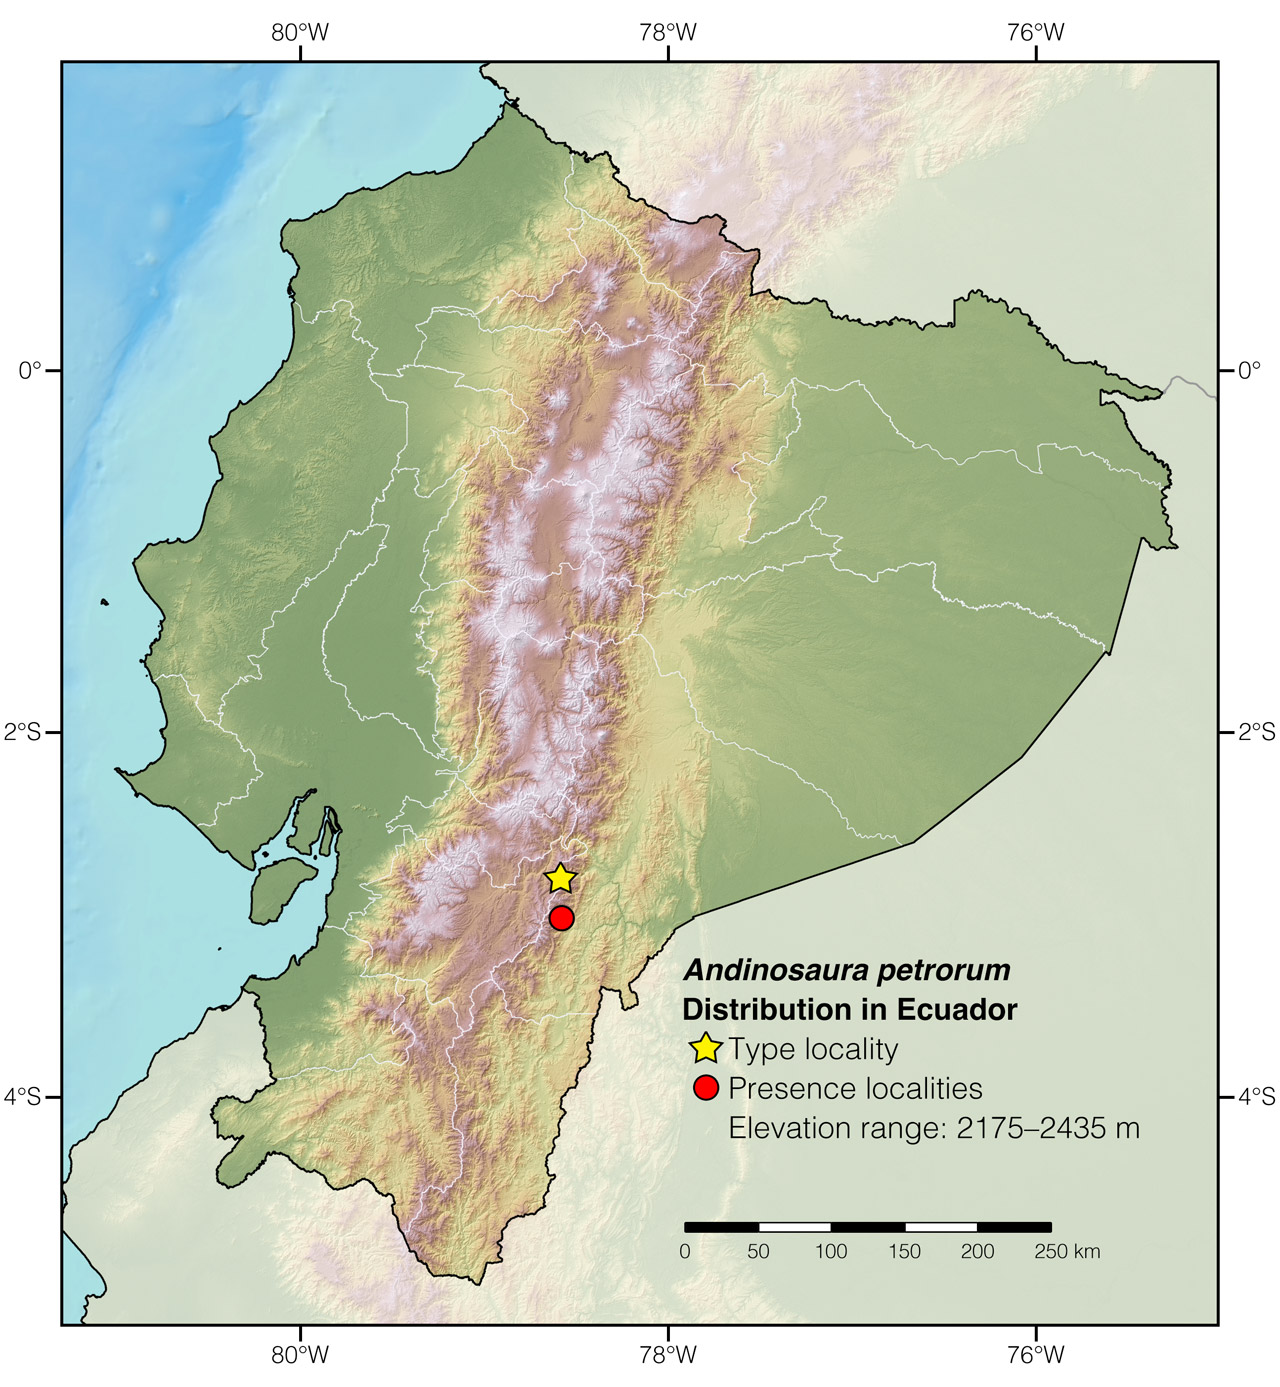 Distribution of Andinosaura petrorum in Ecuador